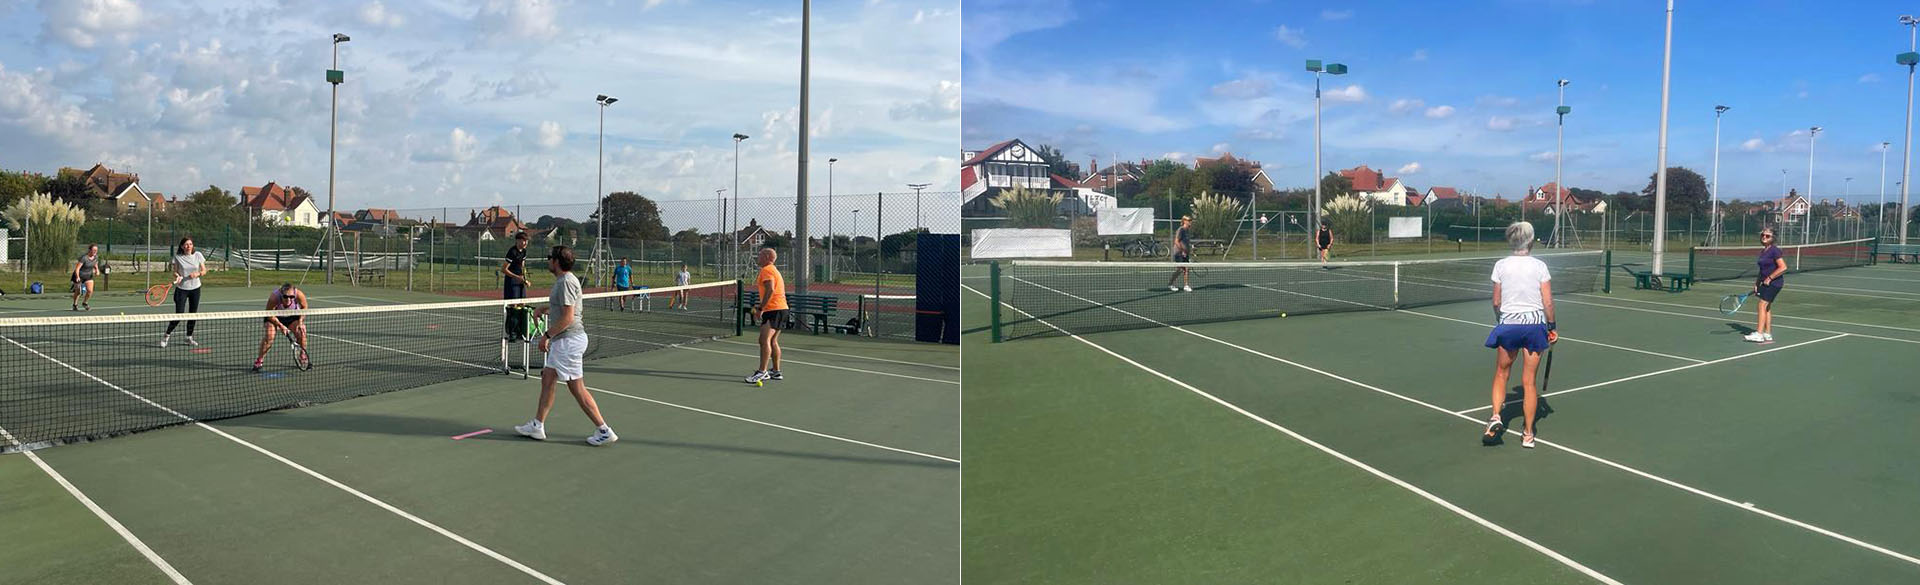 Adult Tennis Coaching at Felixstowe Lawn Tennis Club